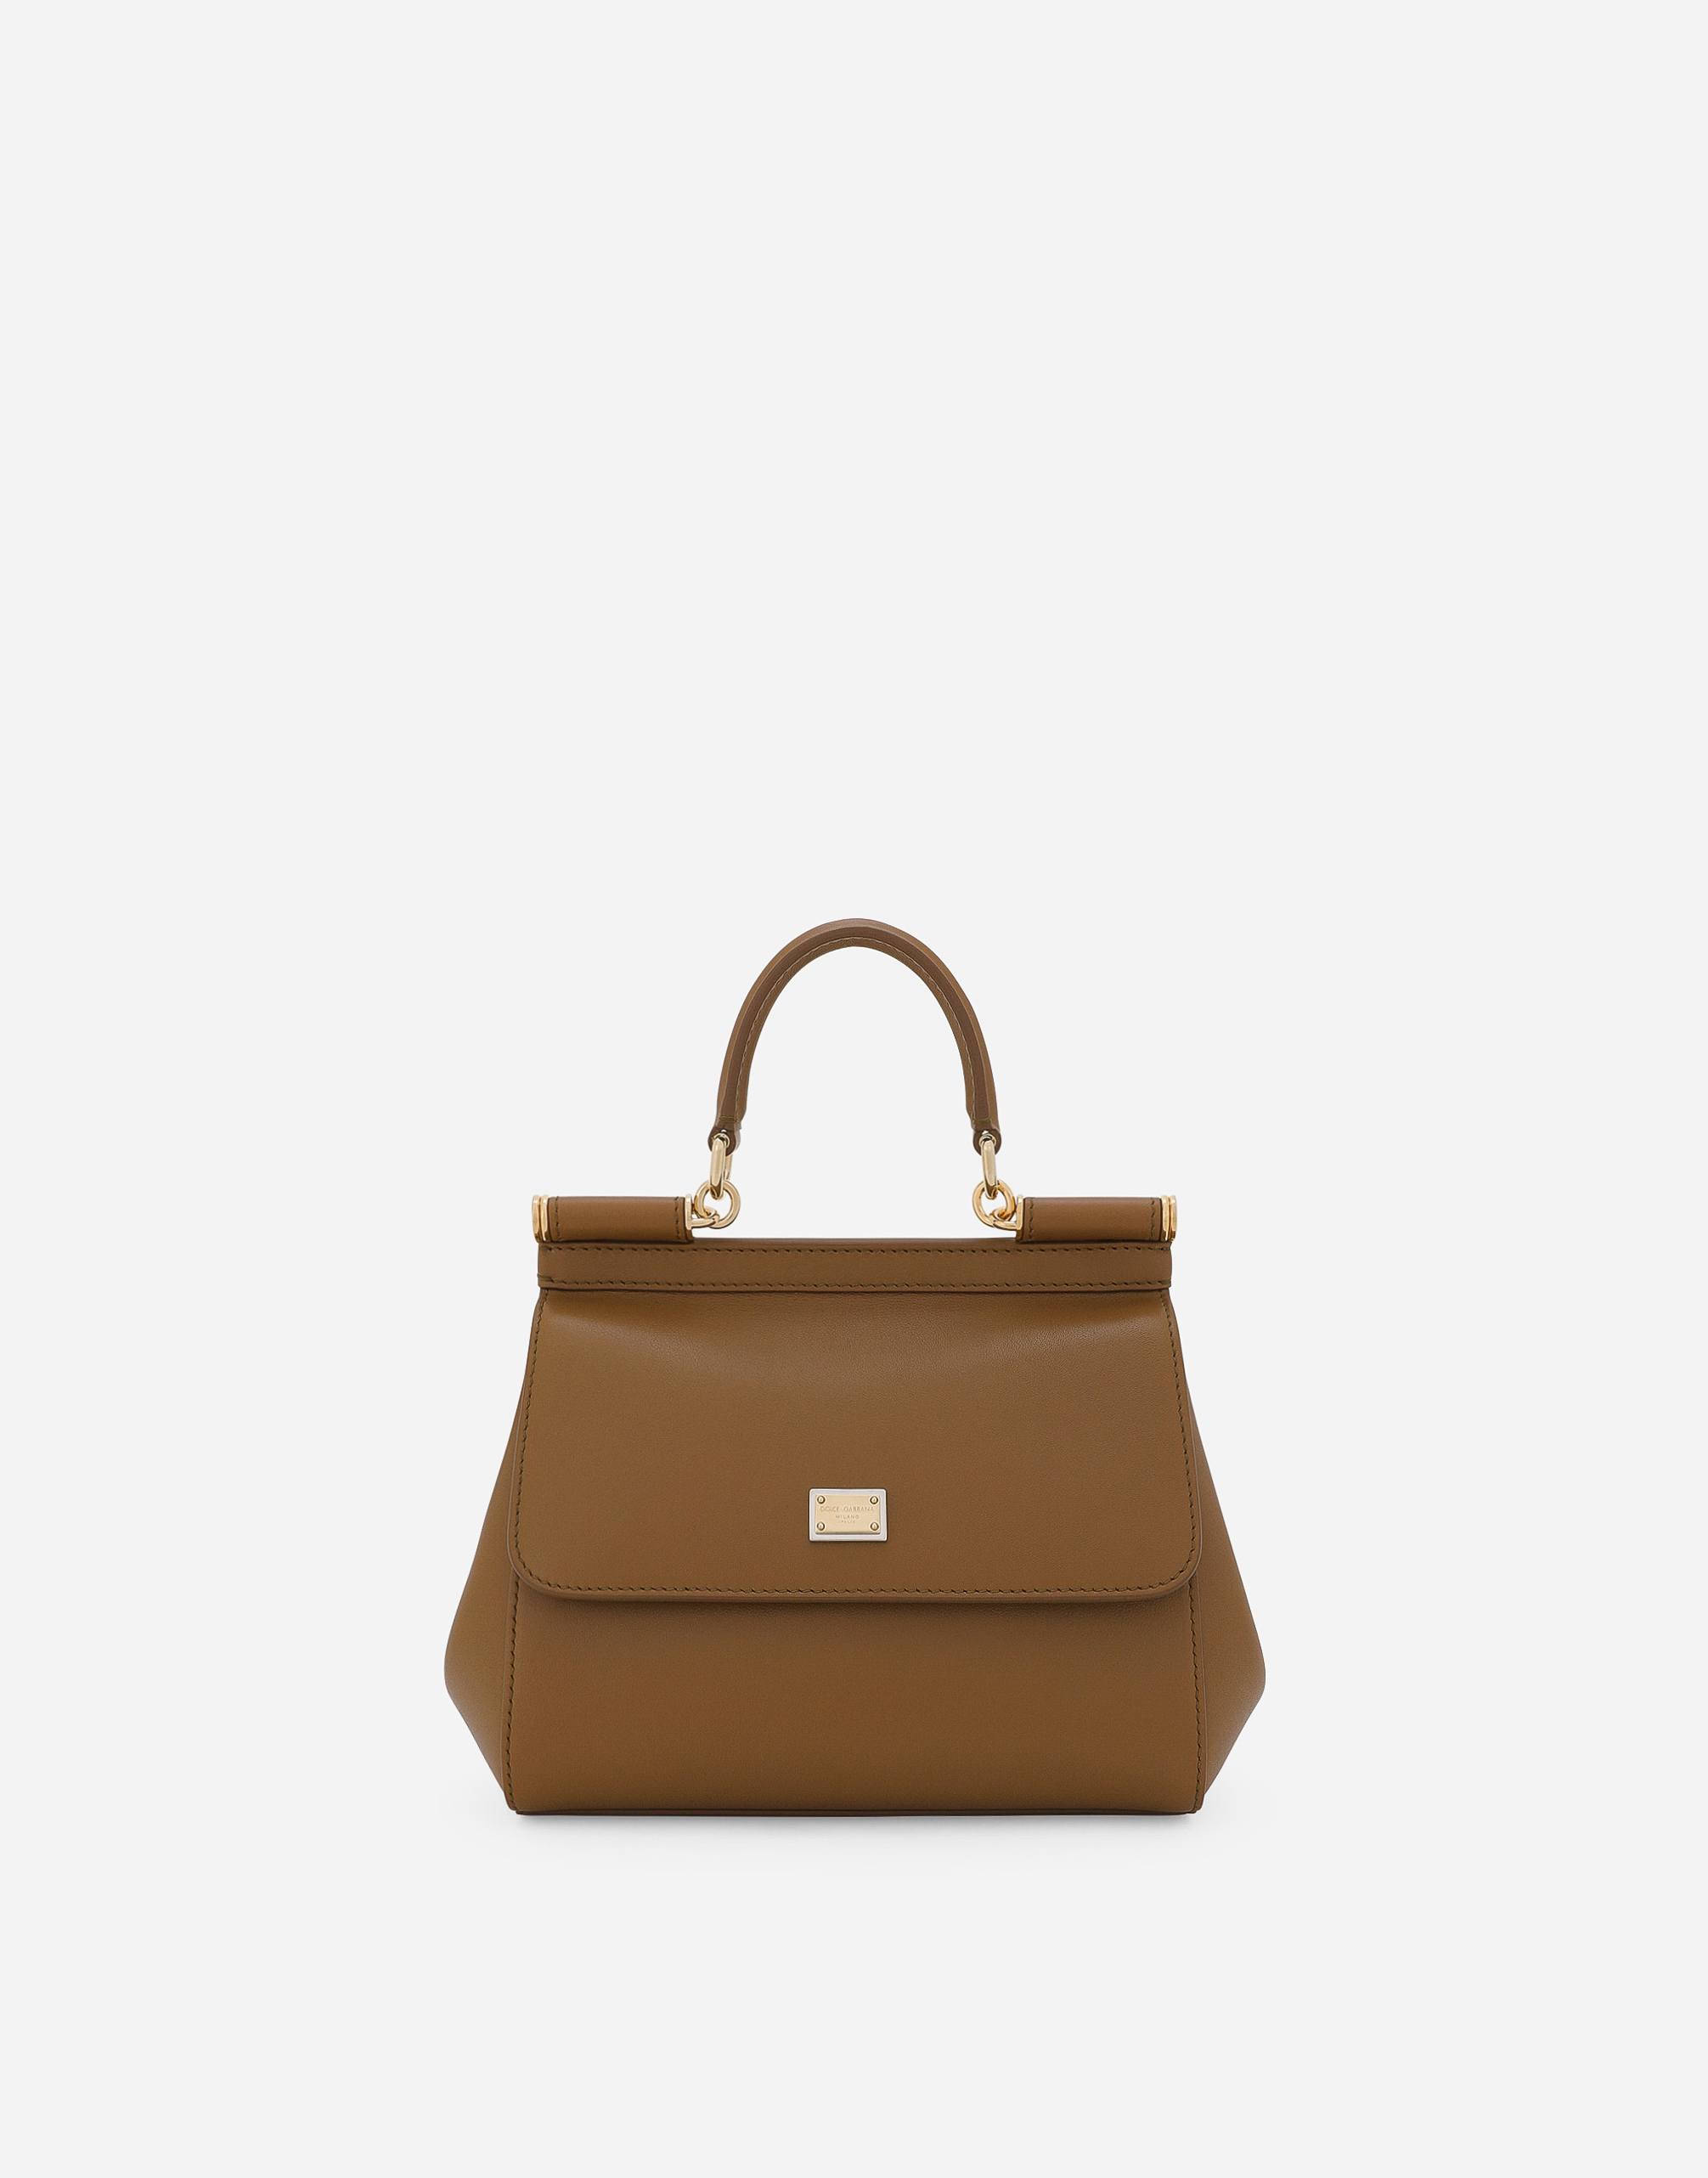 Medium Sicily handbag in Brown for Women | Dolce&Gabbana®